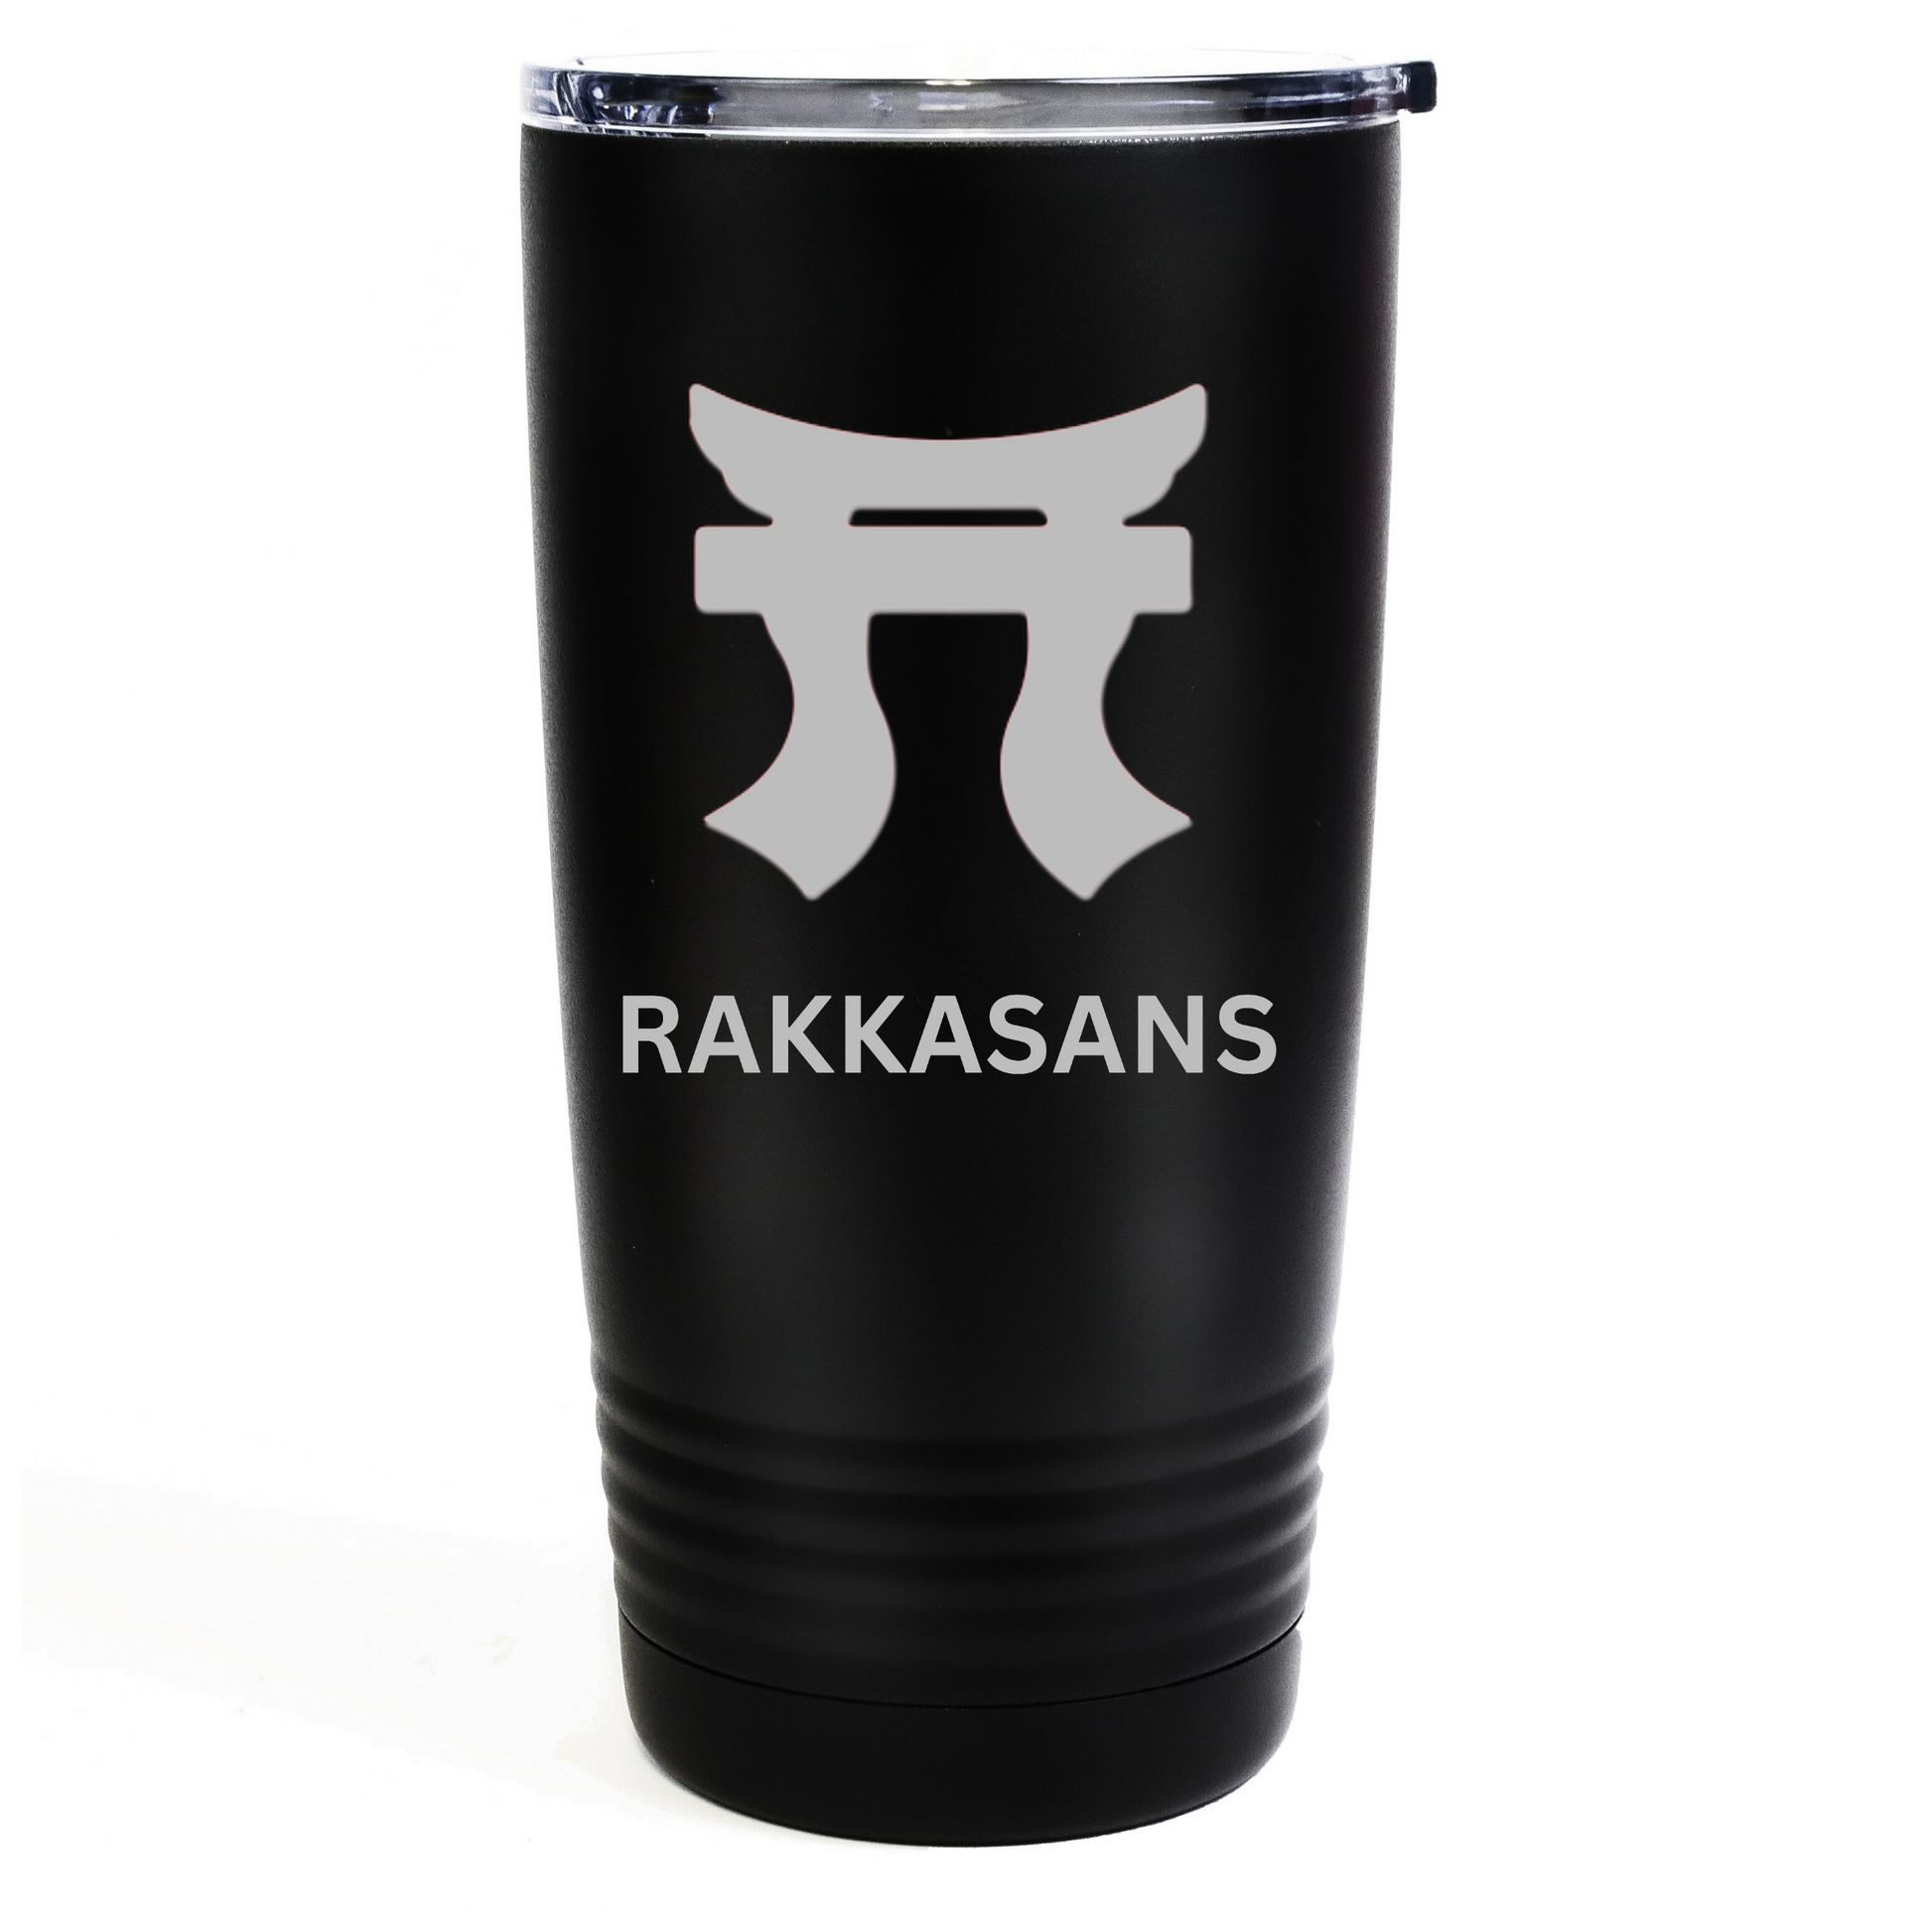 "Black Rakkasans 20oz Stainless Steel Tumbler with Laser Engraved Design."